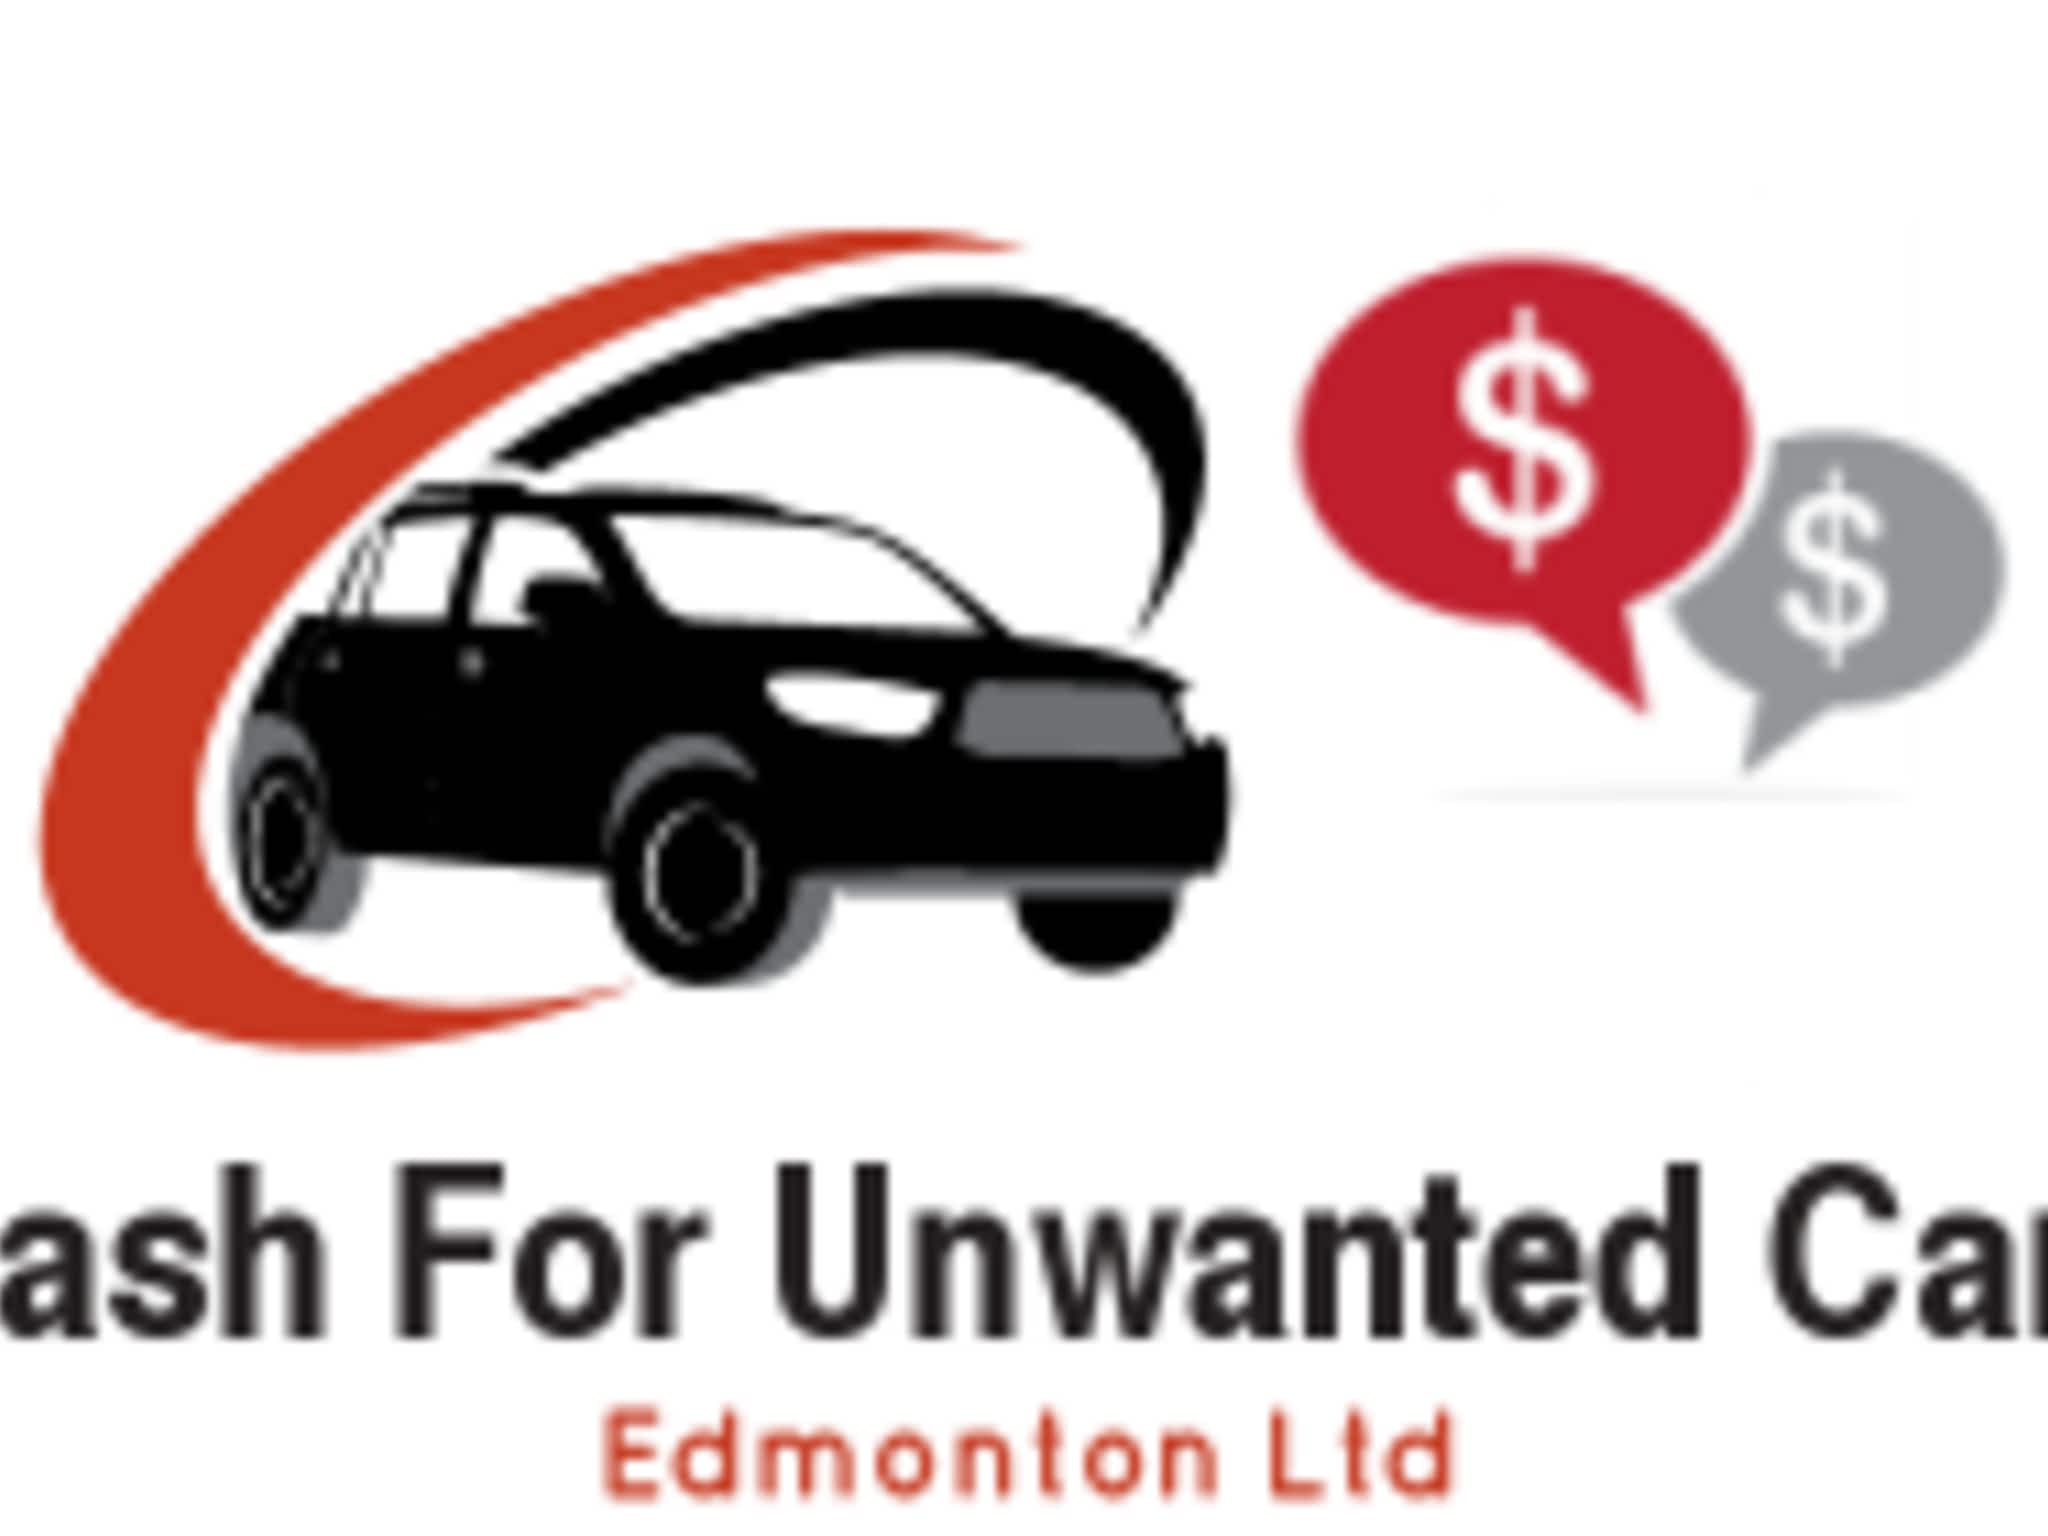 photo Cash For Unwanted Cars Edmonton Ltd